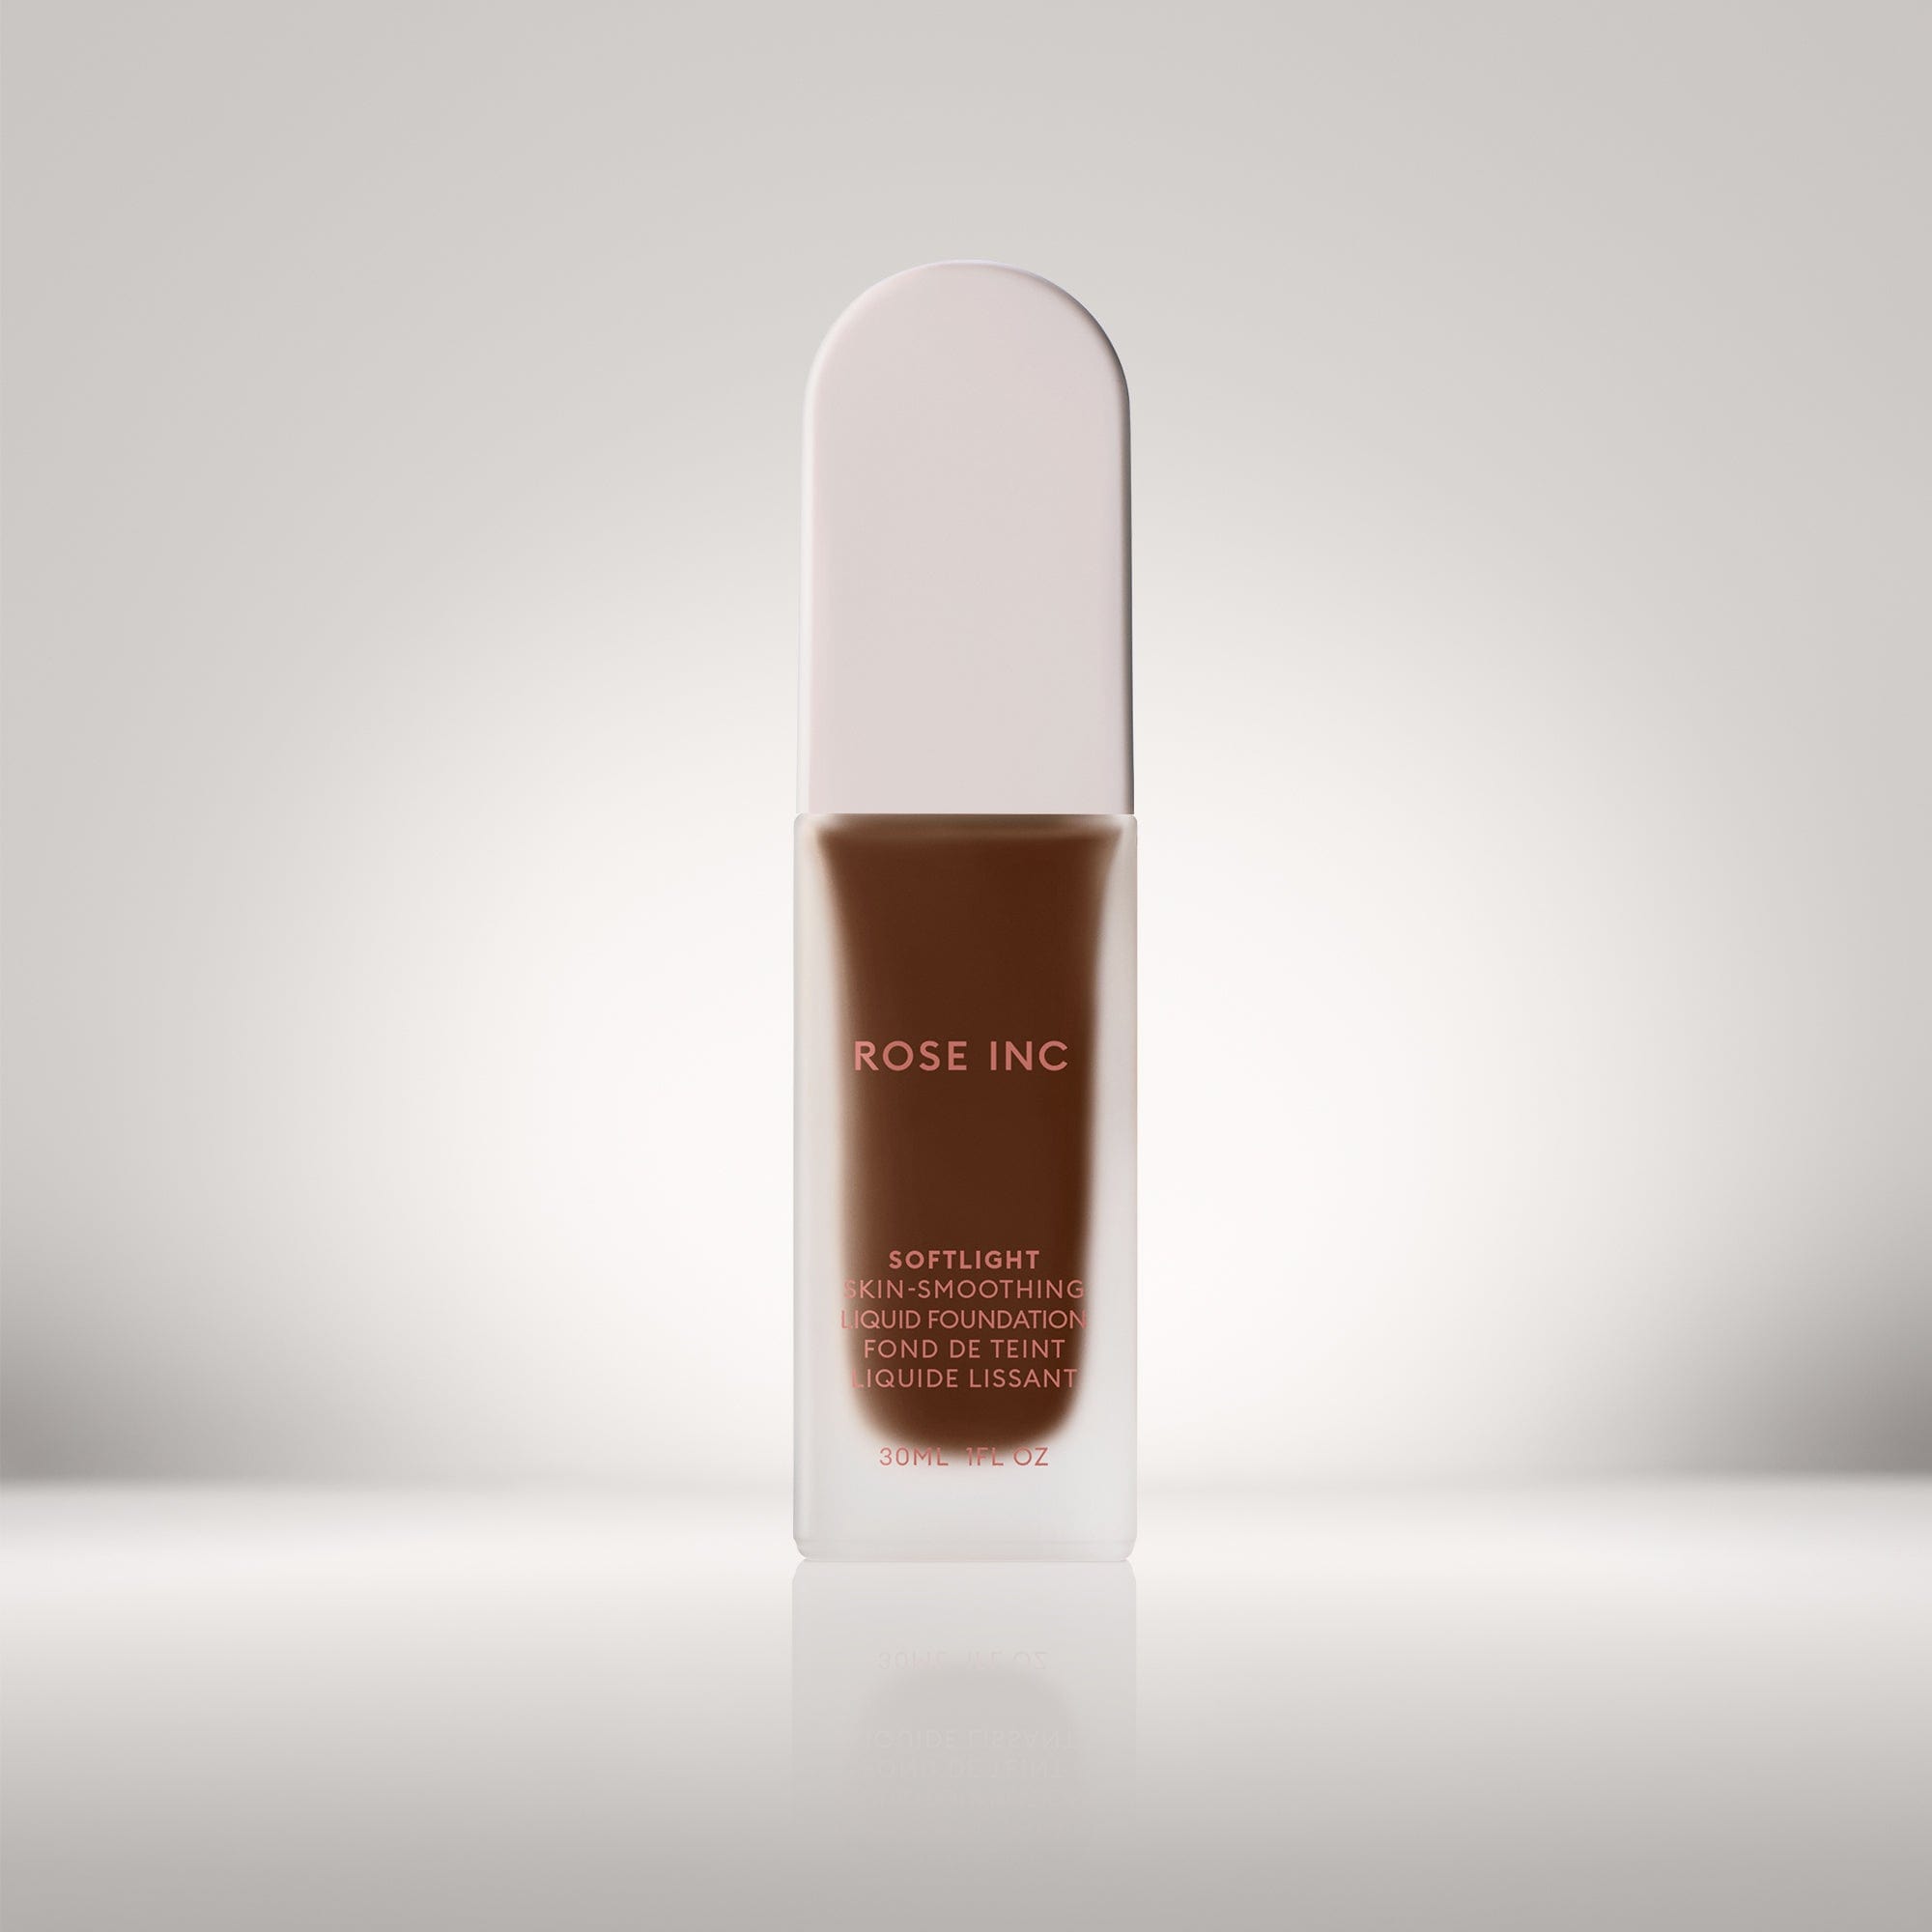 Softlight Skin-Smoothing Liquid Foundation – Rose Inc